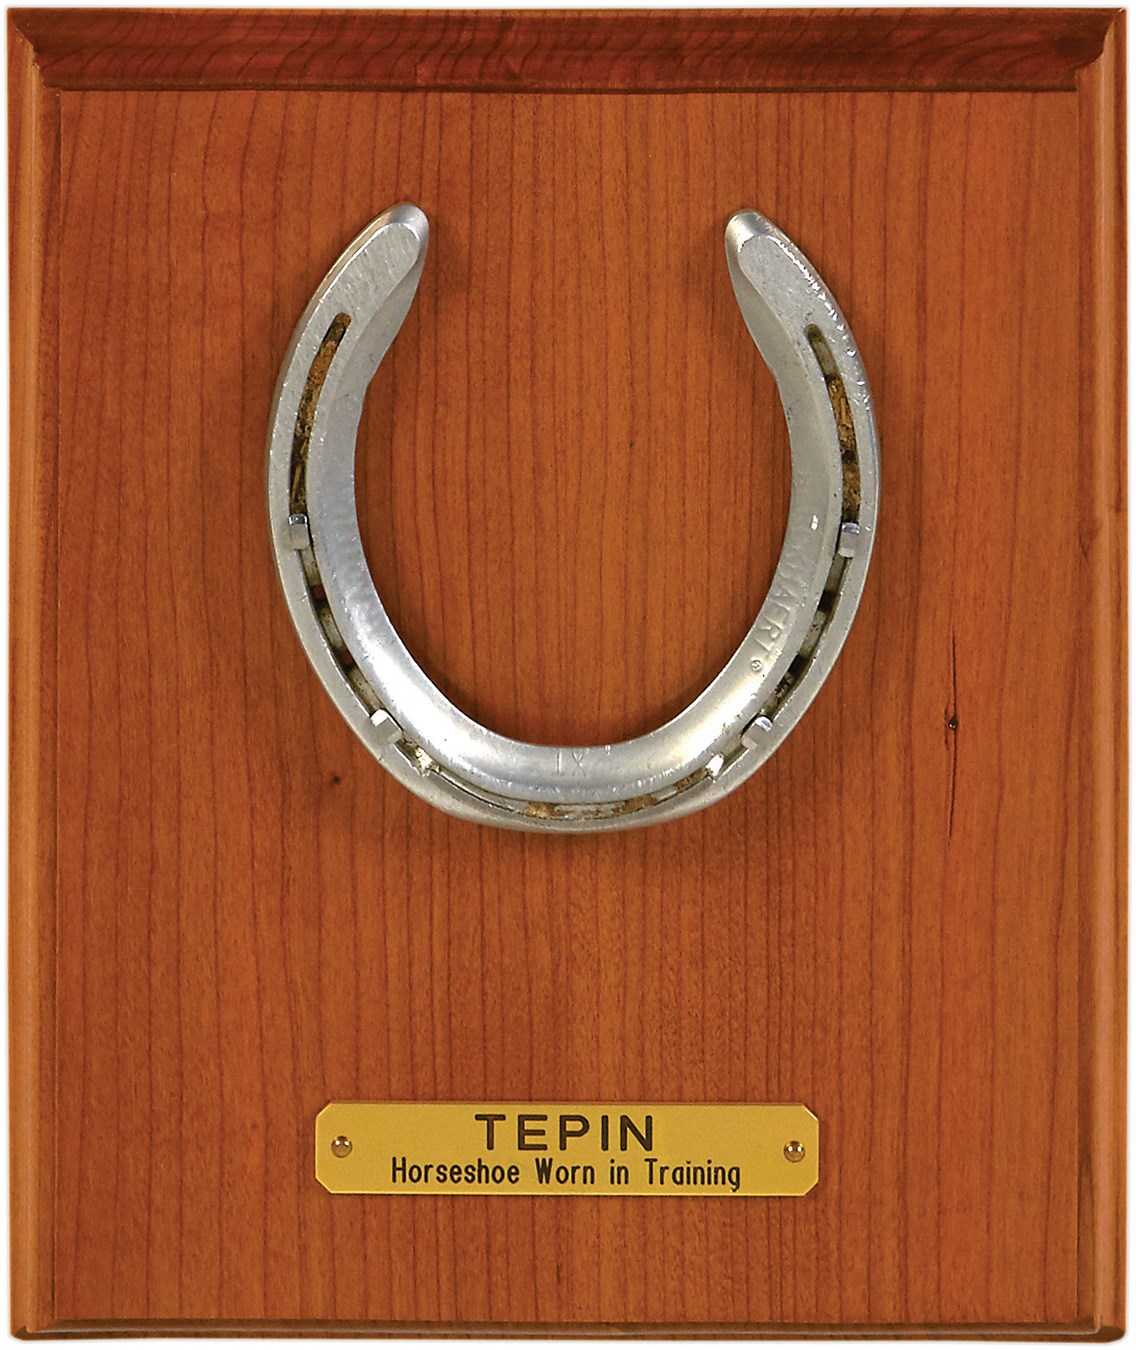 "Tepin" Horseshoe Worn During Training